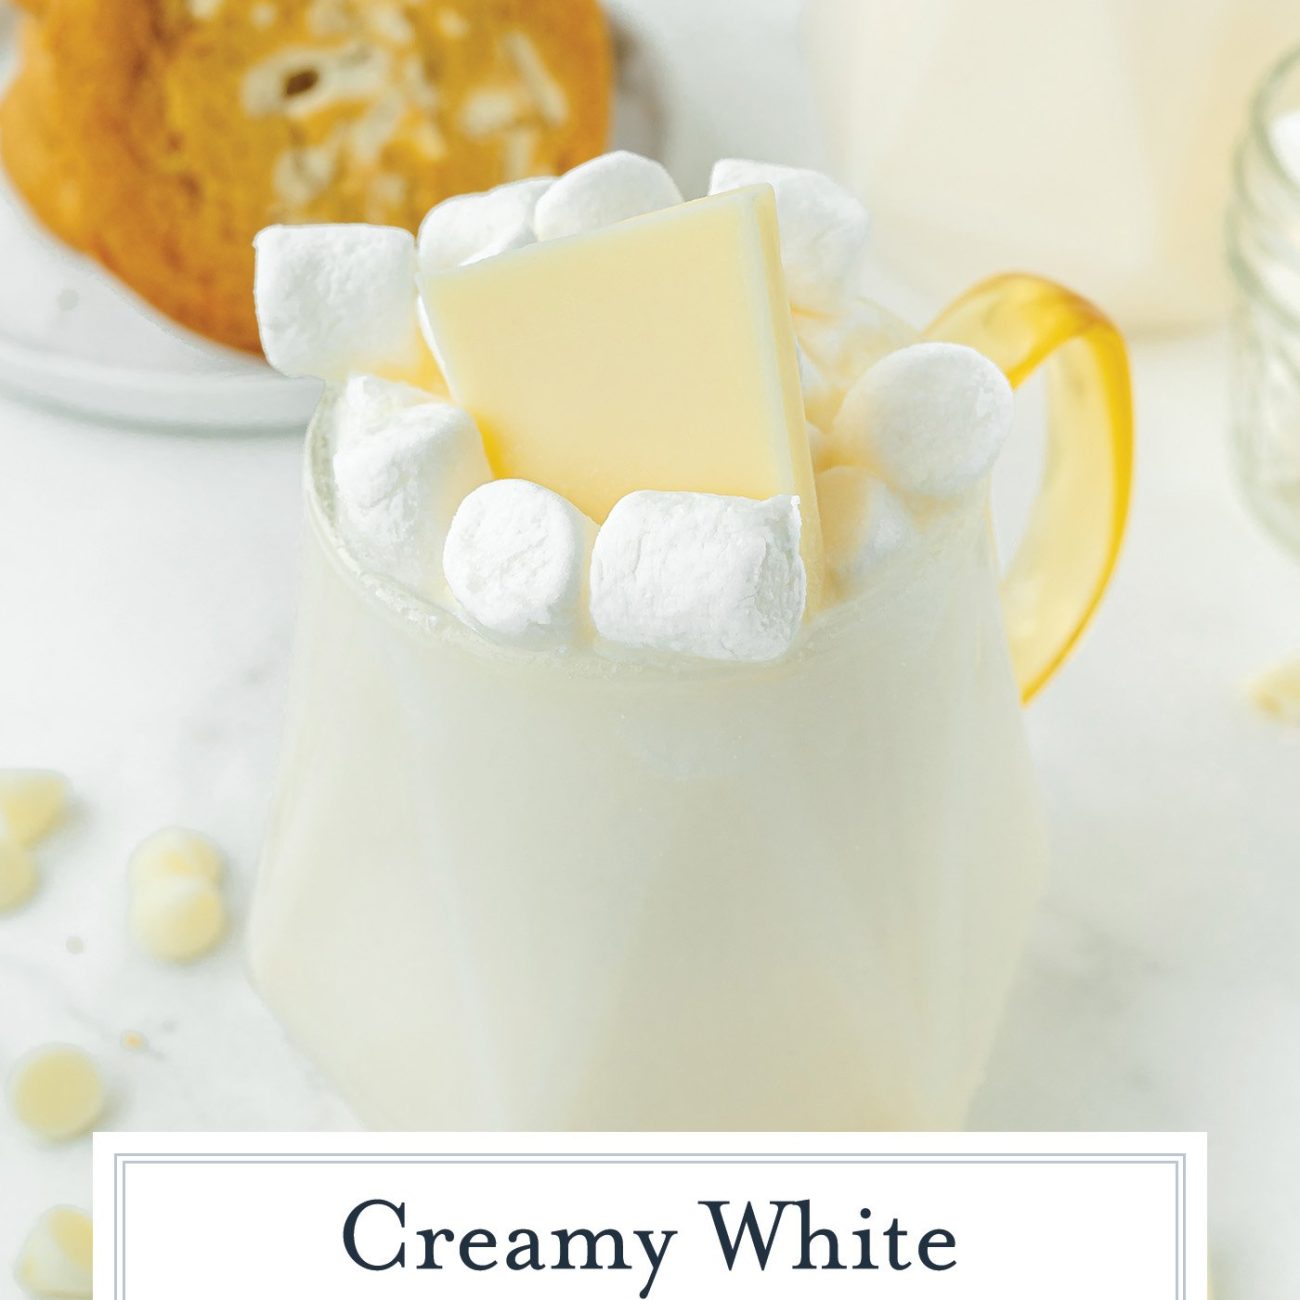 Authentic German-Style Creamy White Hot Chocolate Recipe